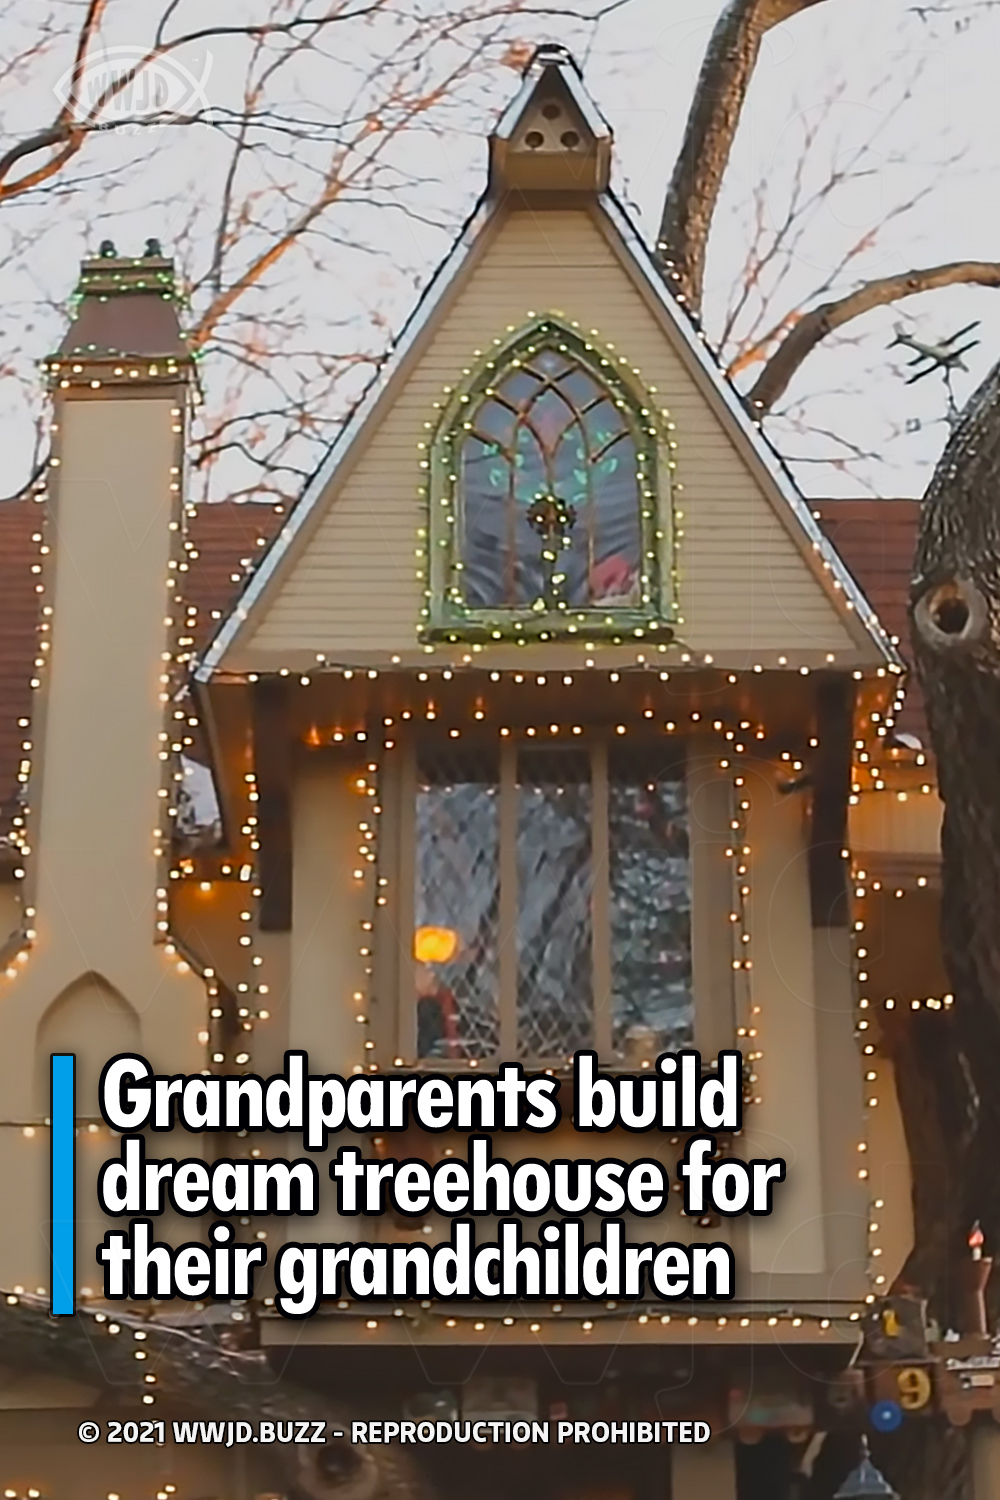 Grandparents build dream treehouse for their grandchildren